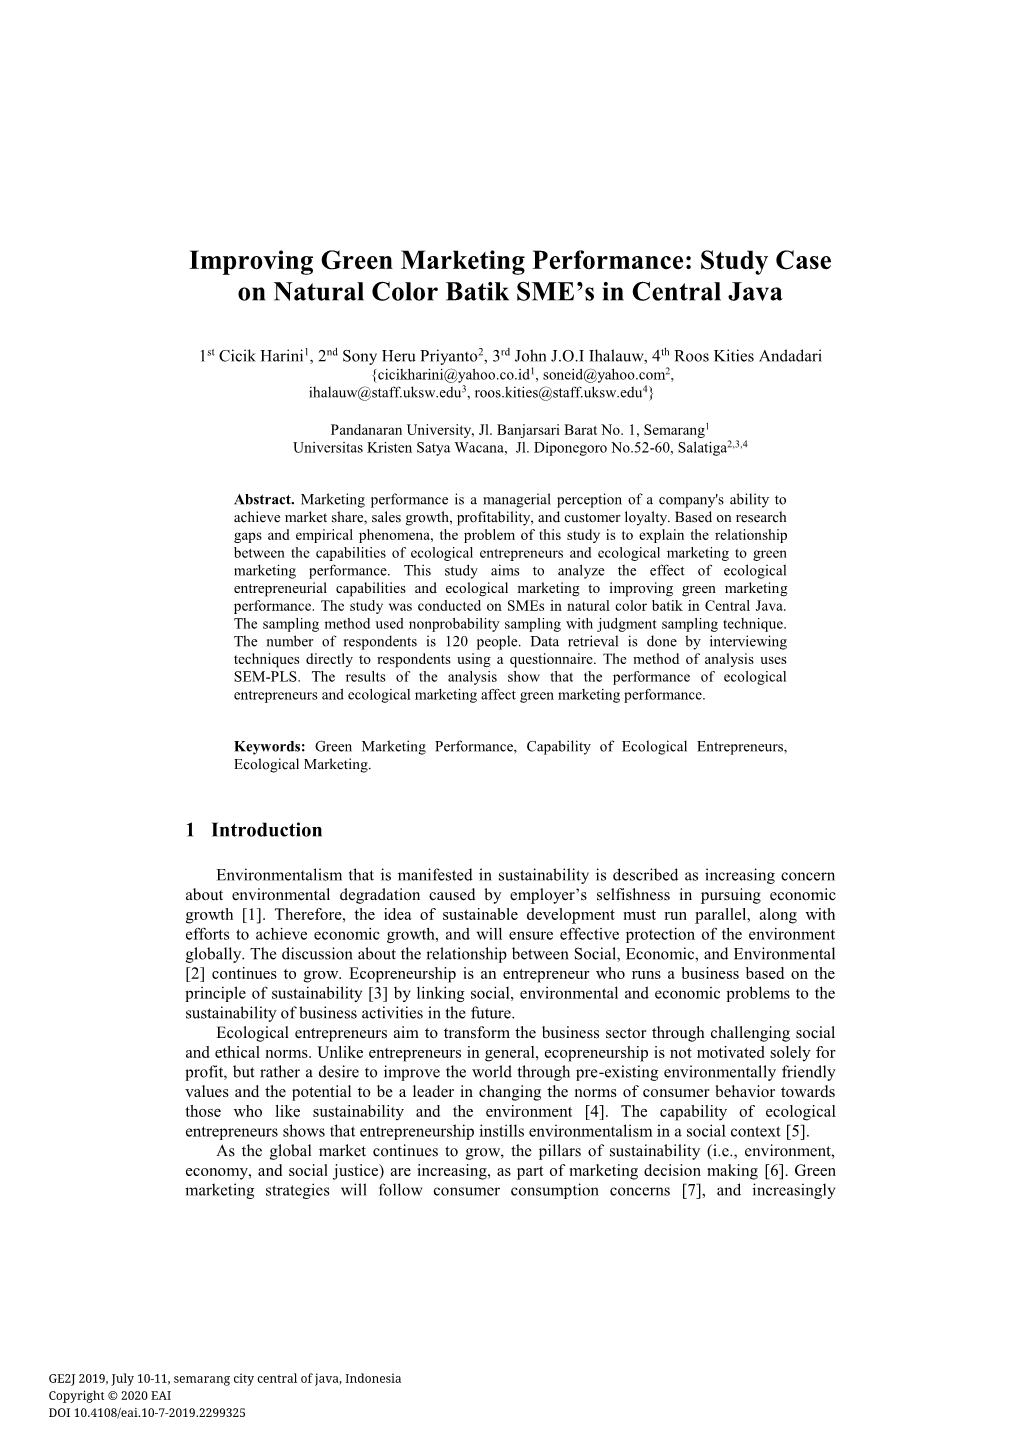 Improving Green Marketing Performance: Study Case on Natural Color Batik SME’S in Central Java